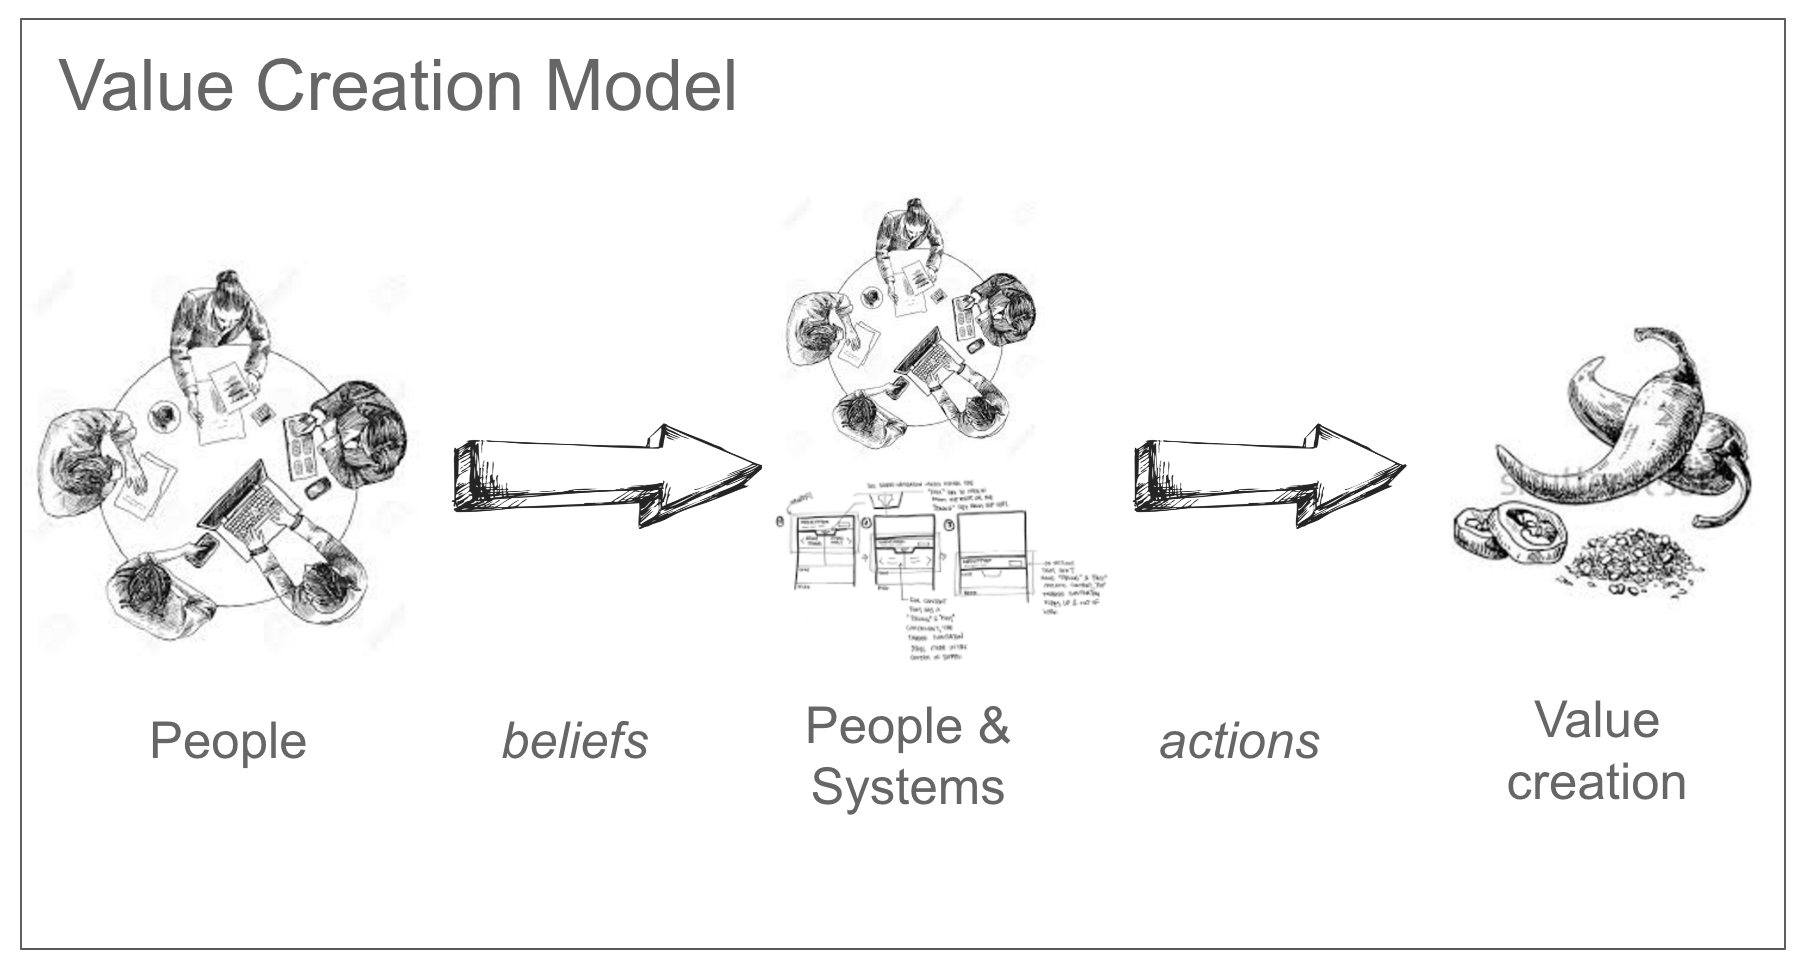 Value creation model